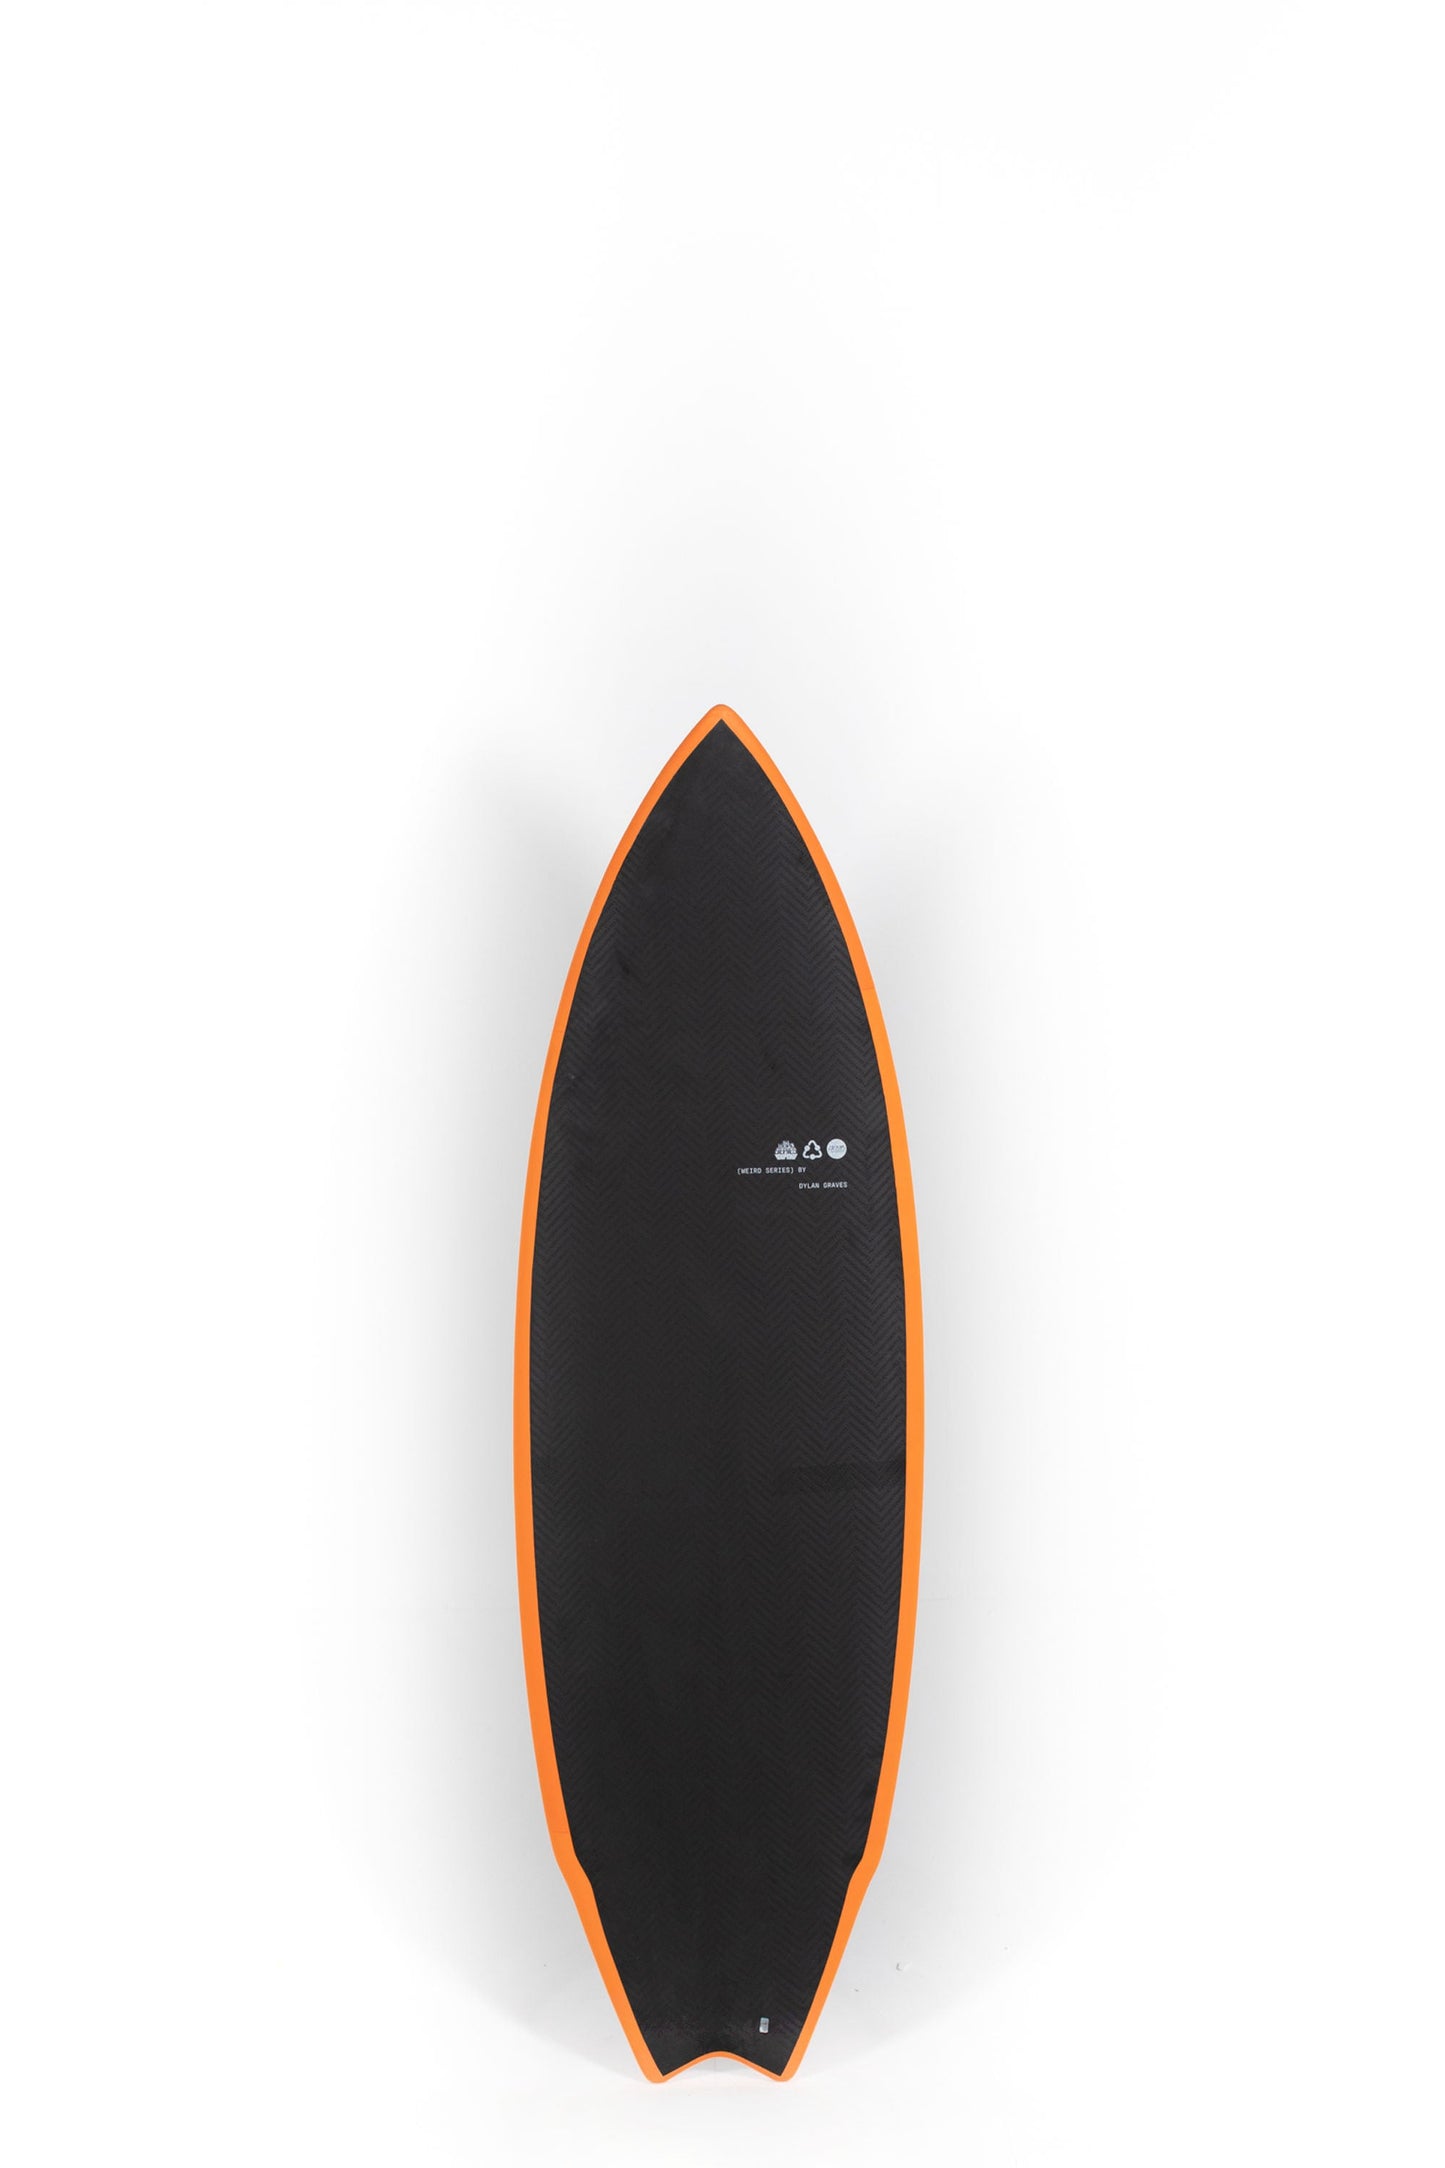 Pukas Surf Shop - HaydenShapes Surfboard - WEIRD WAVES SOFT - 6'0" x 21" x 2 3/4" x 38L - ESOFTWSDG-FU